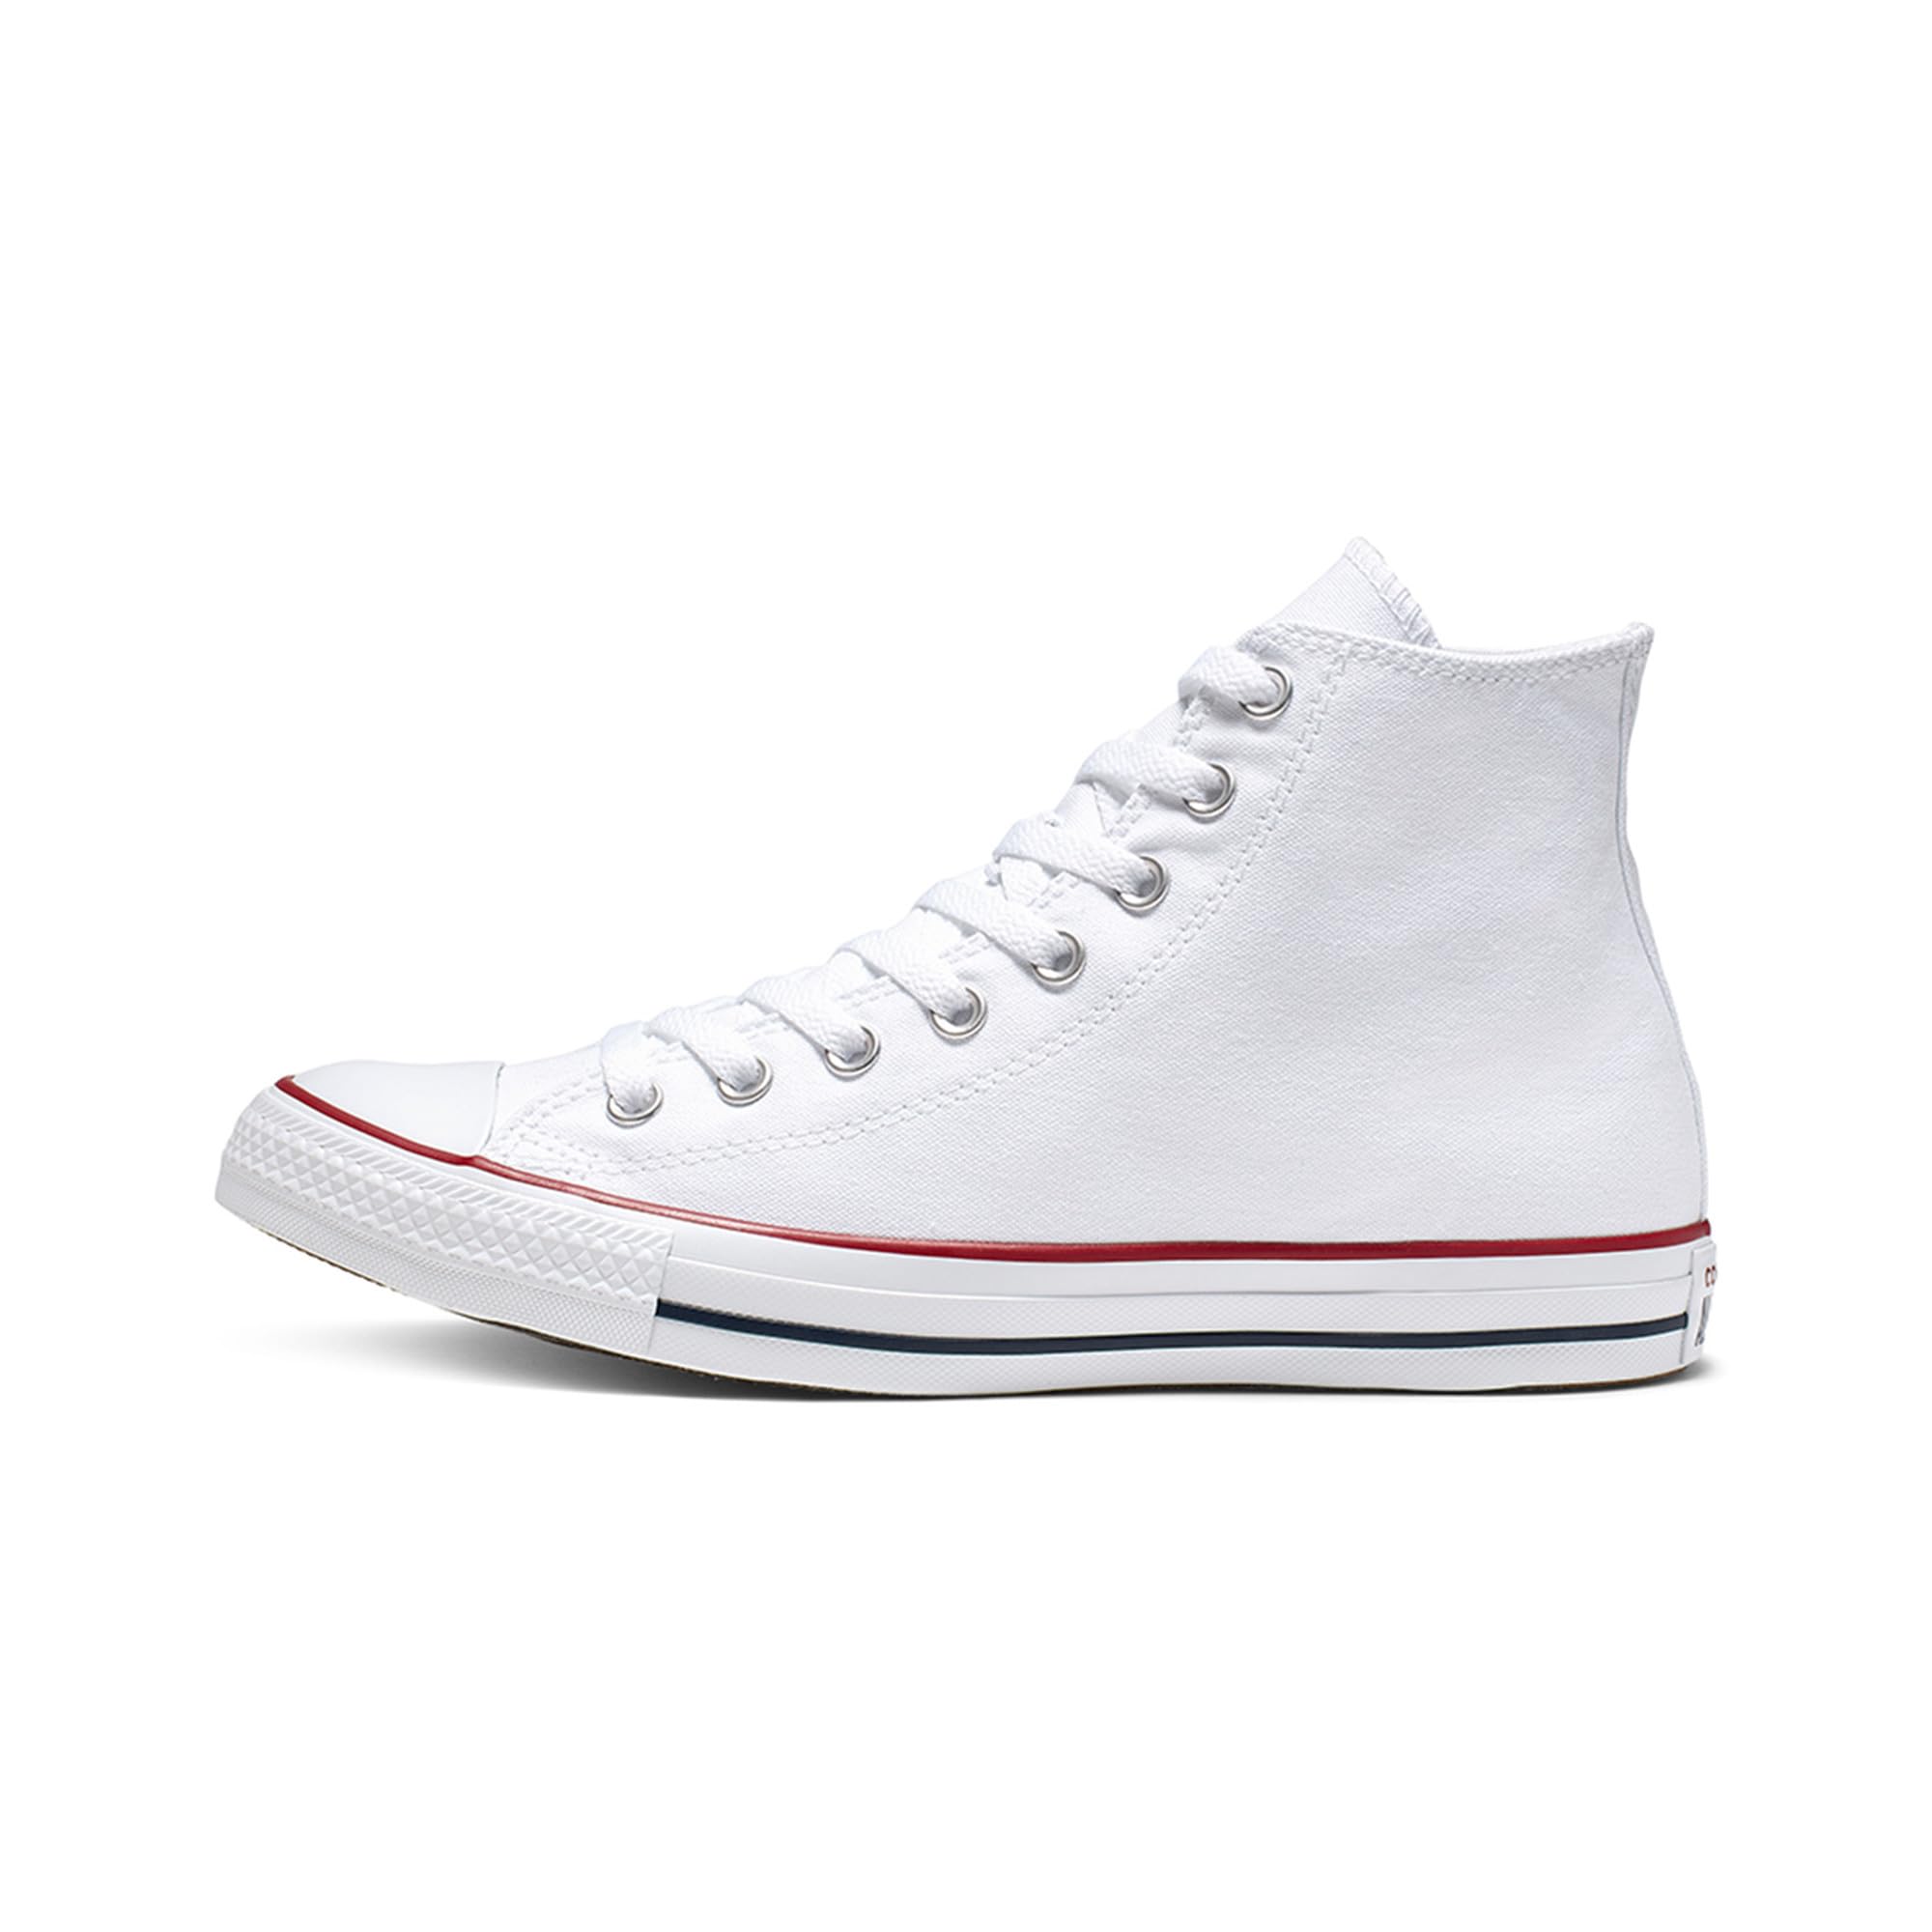 Converse All Star Hi Canvas Sneakers, Optical White, 42.5 EU